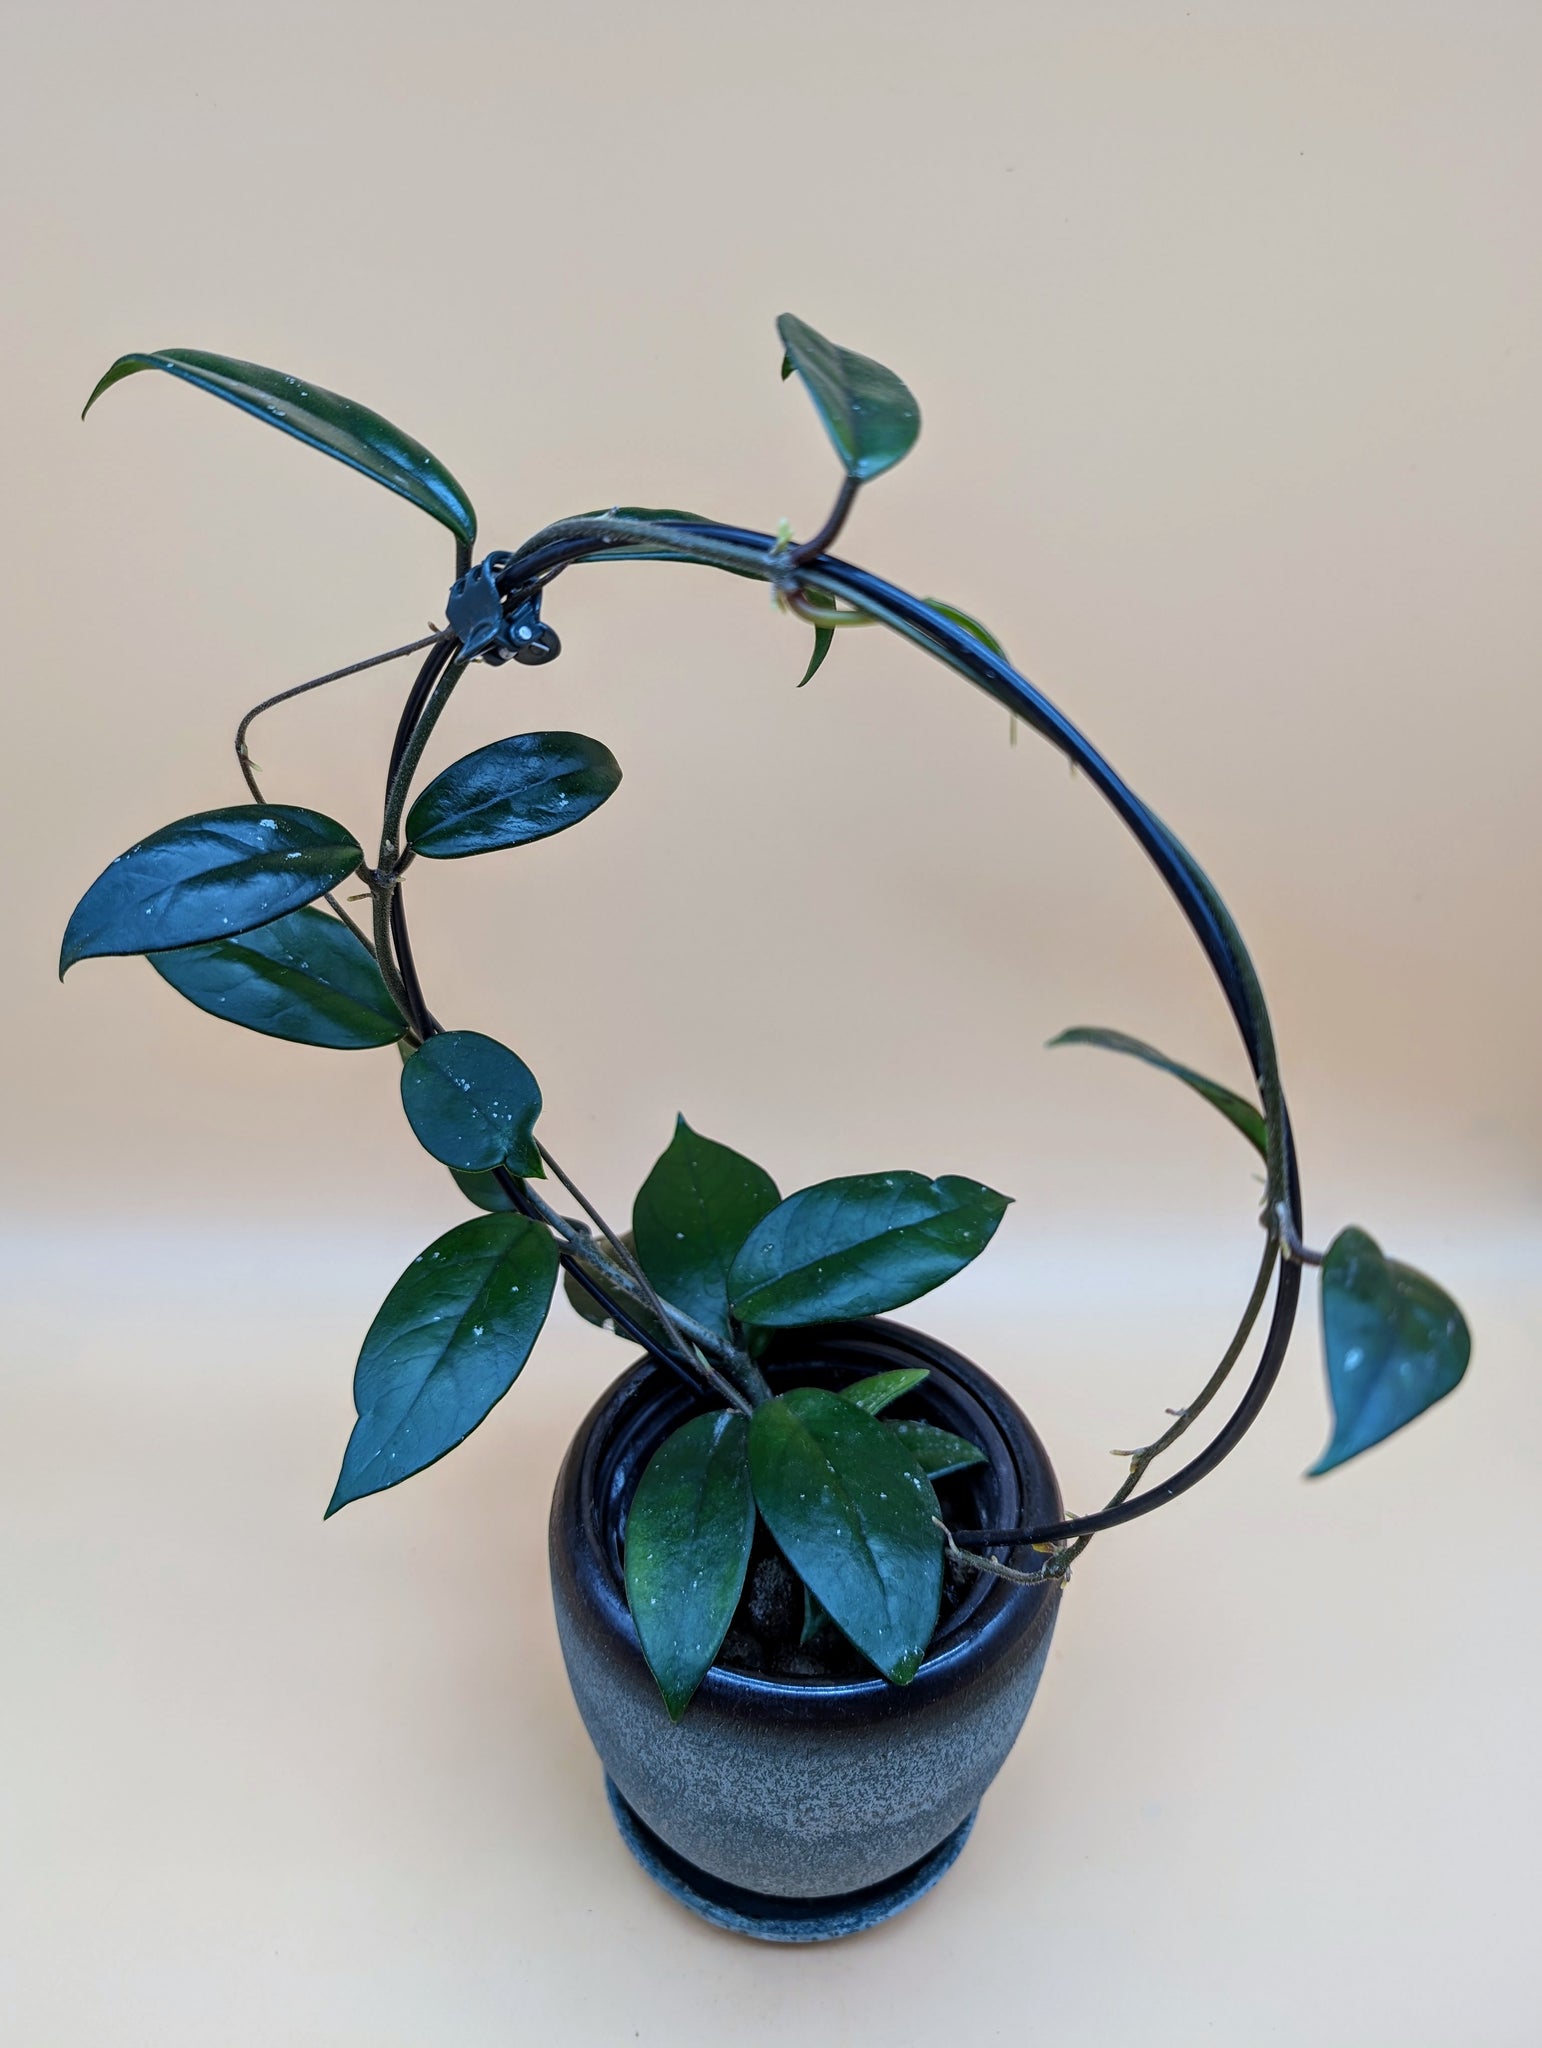 Hoya dasyantha